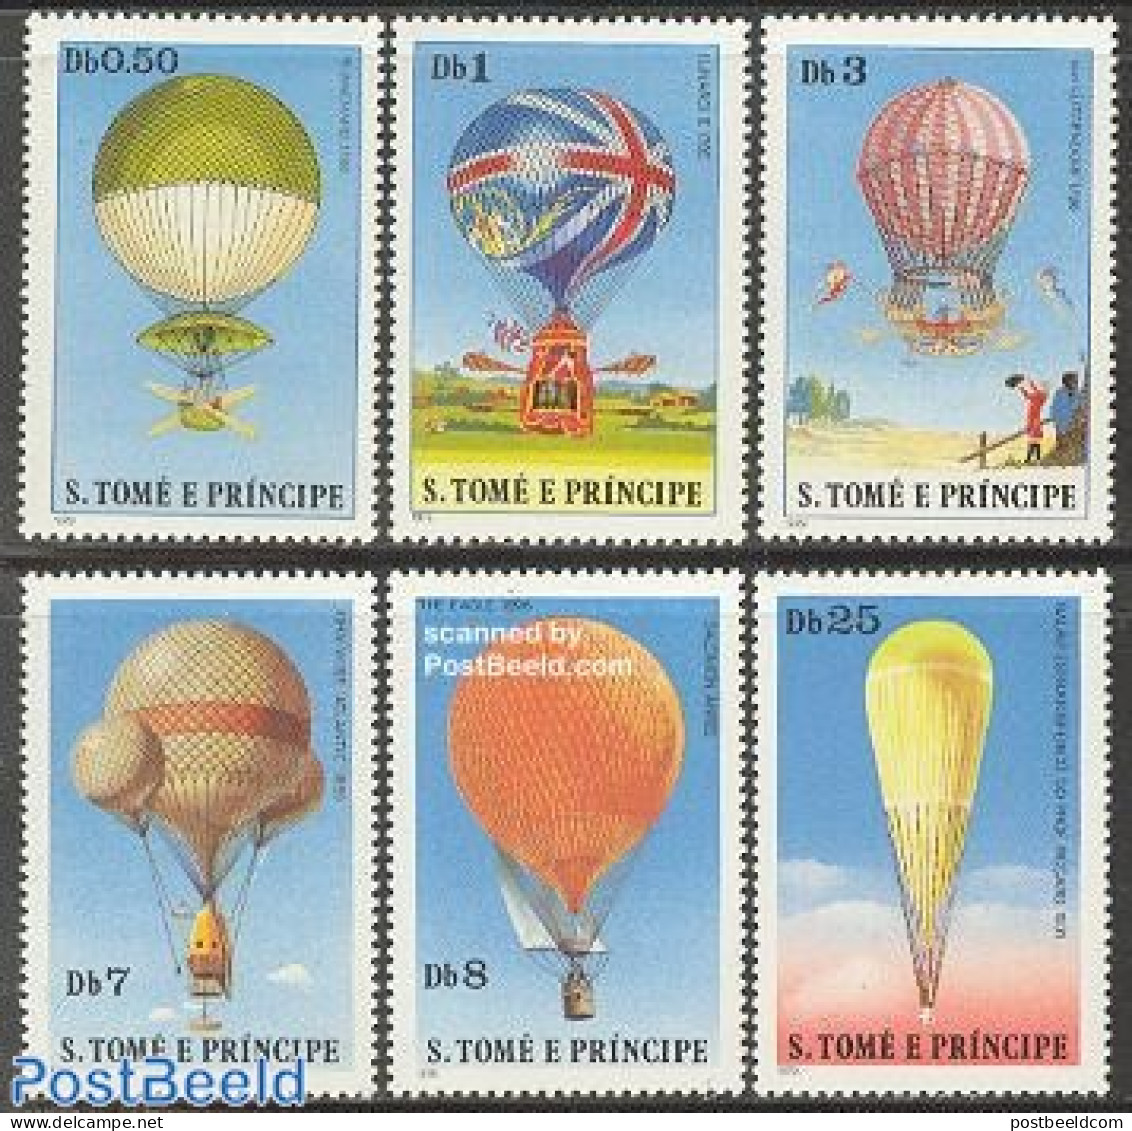 Sao Tome/Principe 1979 Aviation History, Balloons 6v, Mint NH, Transport - Balloons - Fesselballons